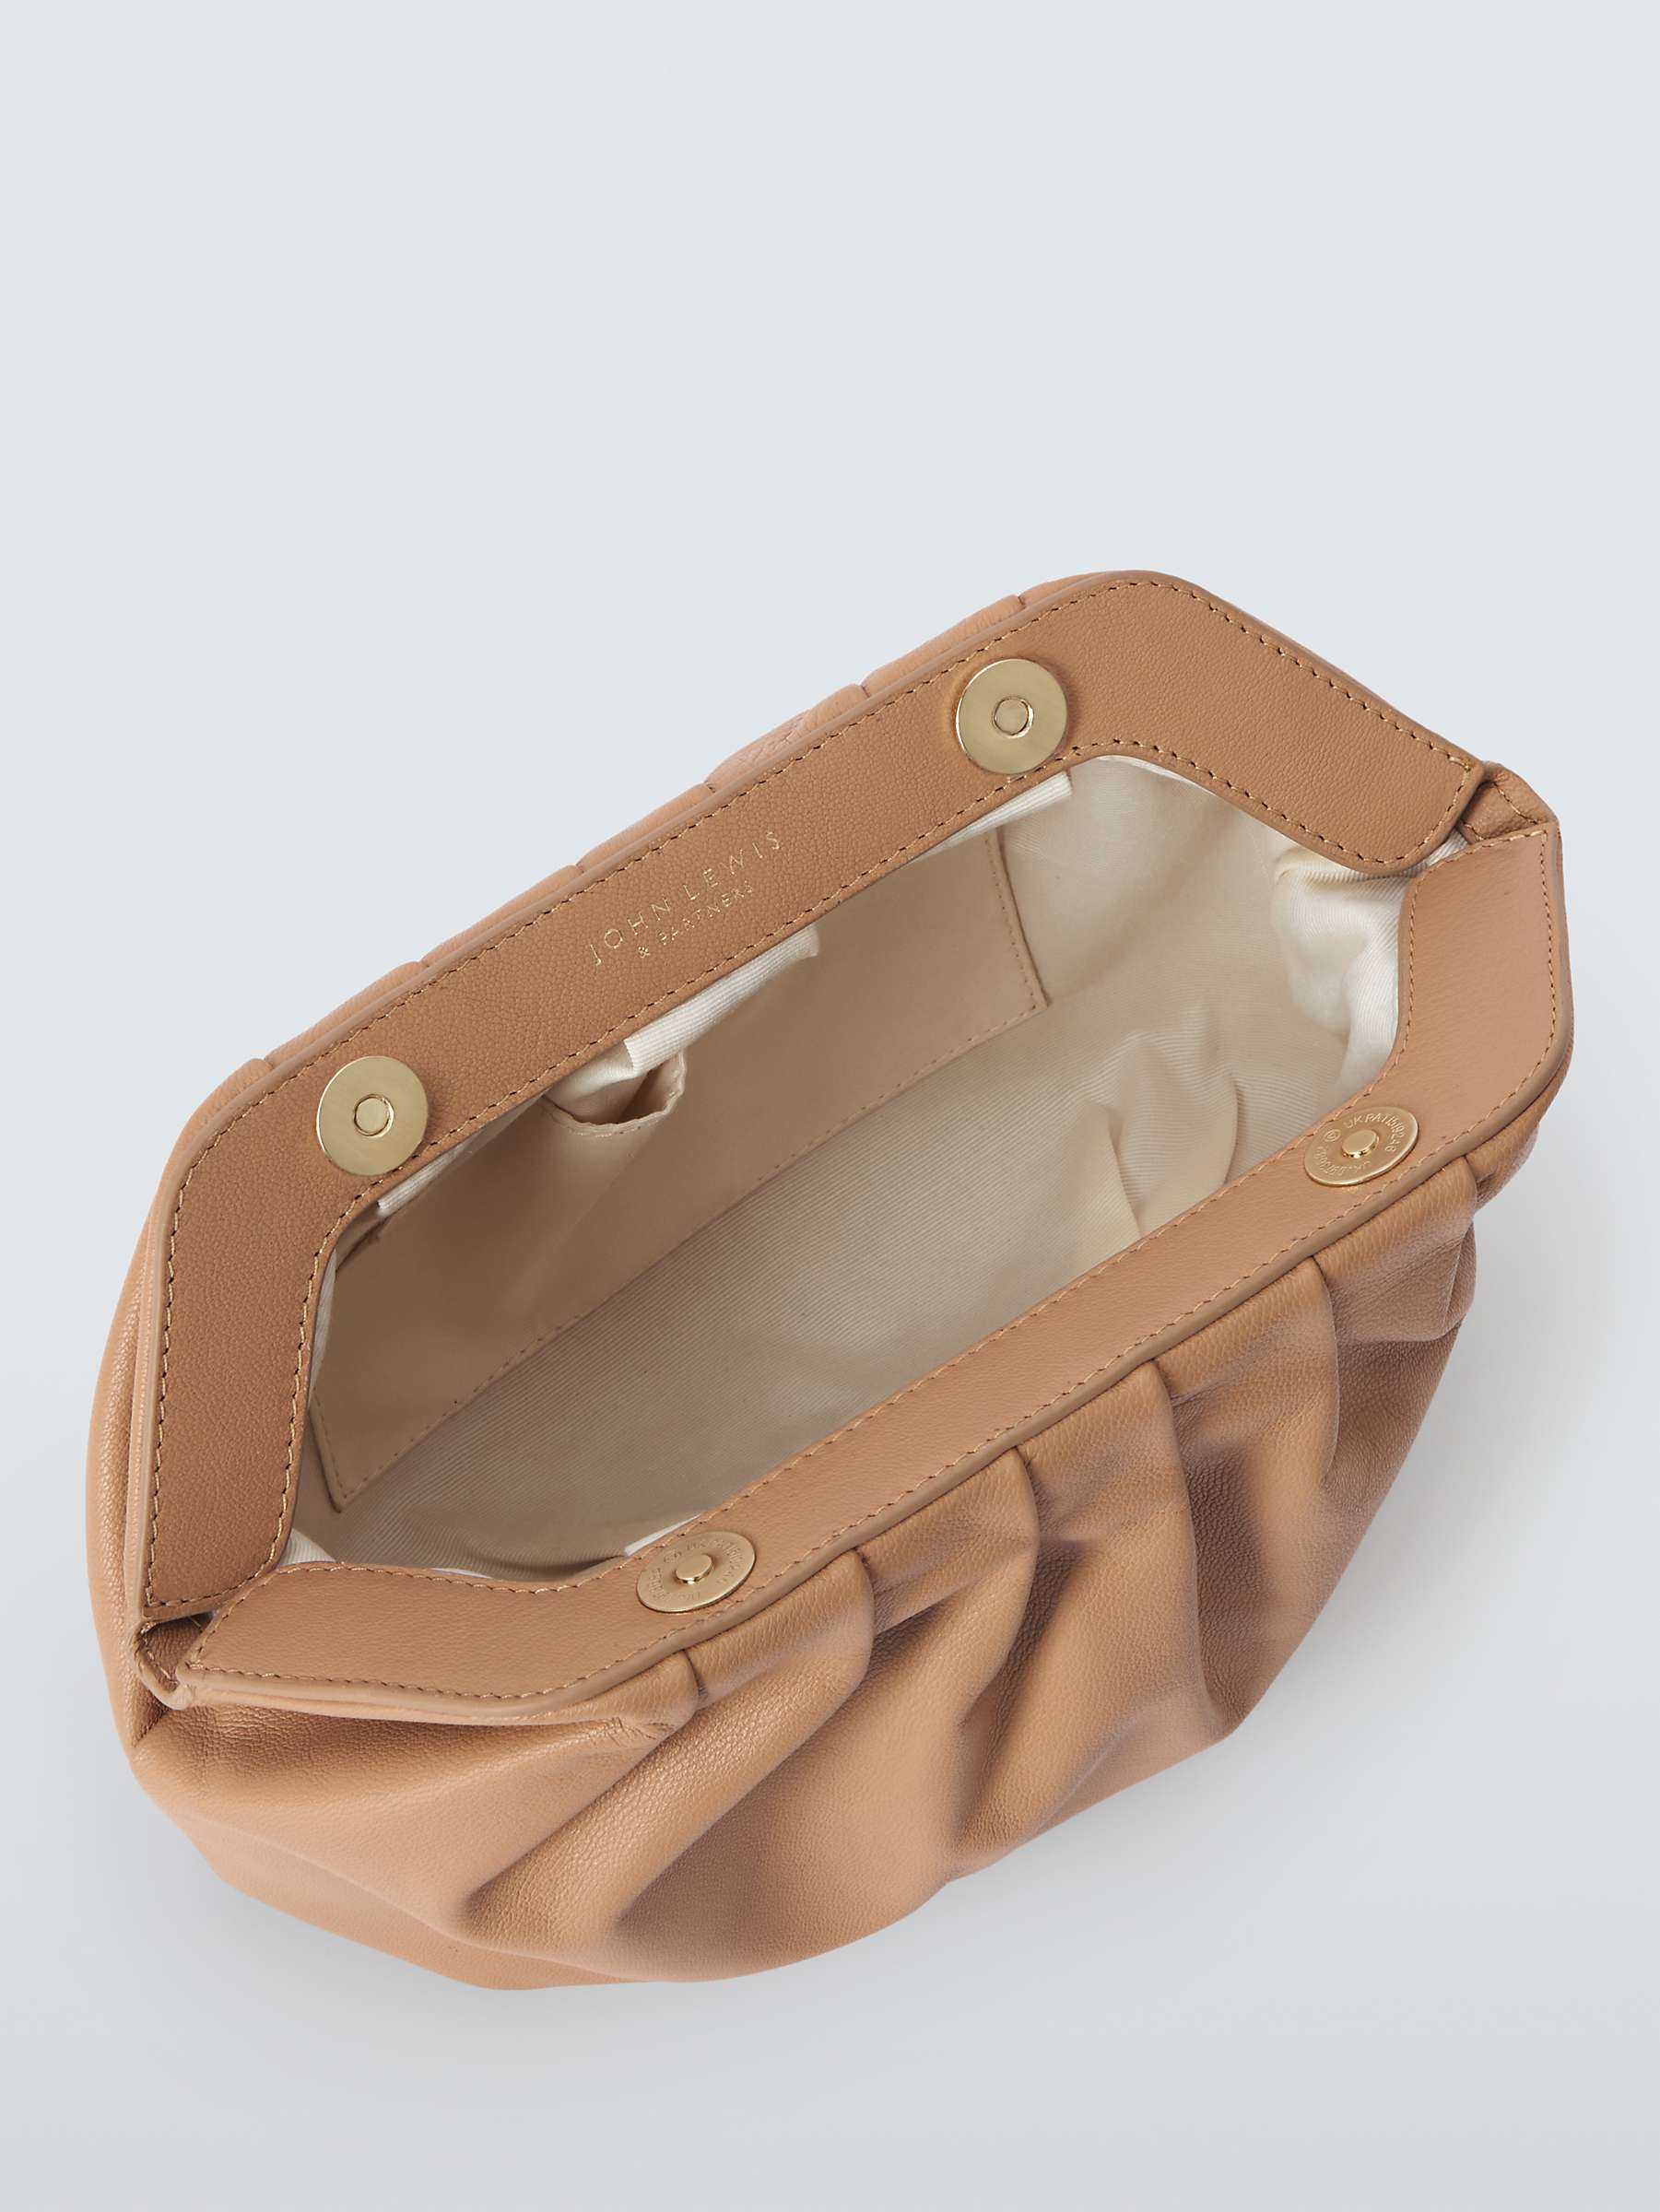 Buy John Lewis Cloud Leather Clutch Bag Online at johnlewis.com